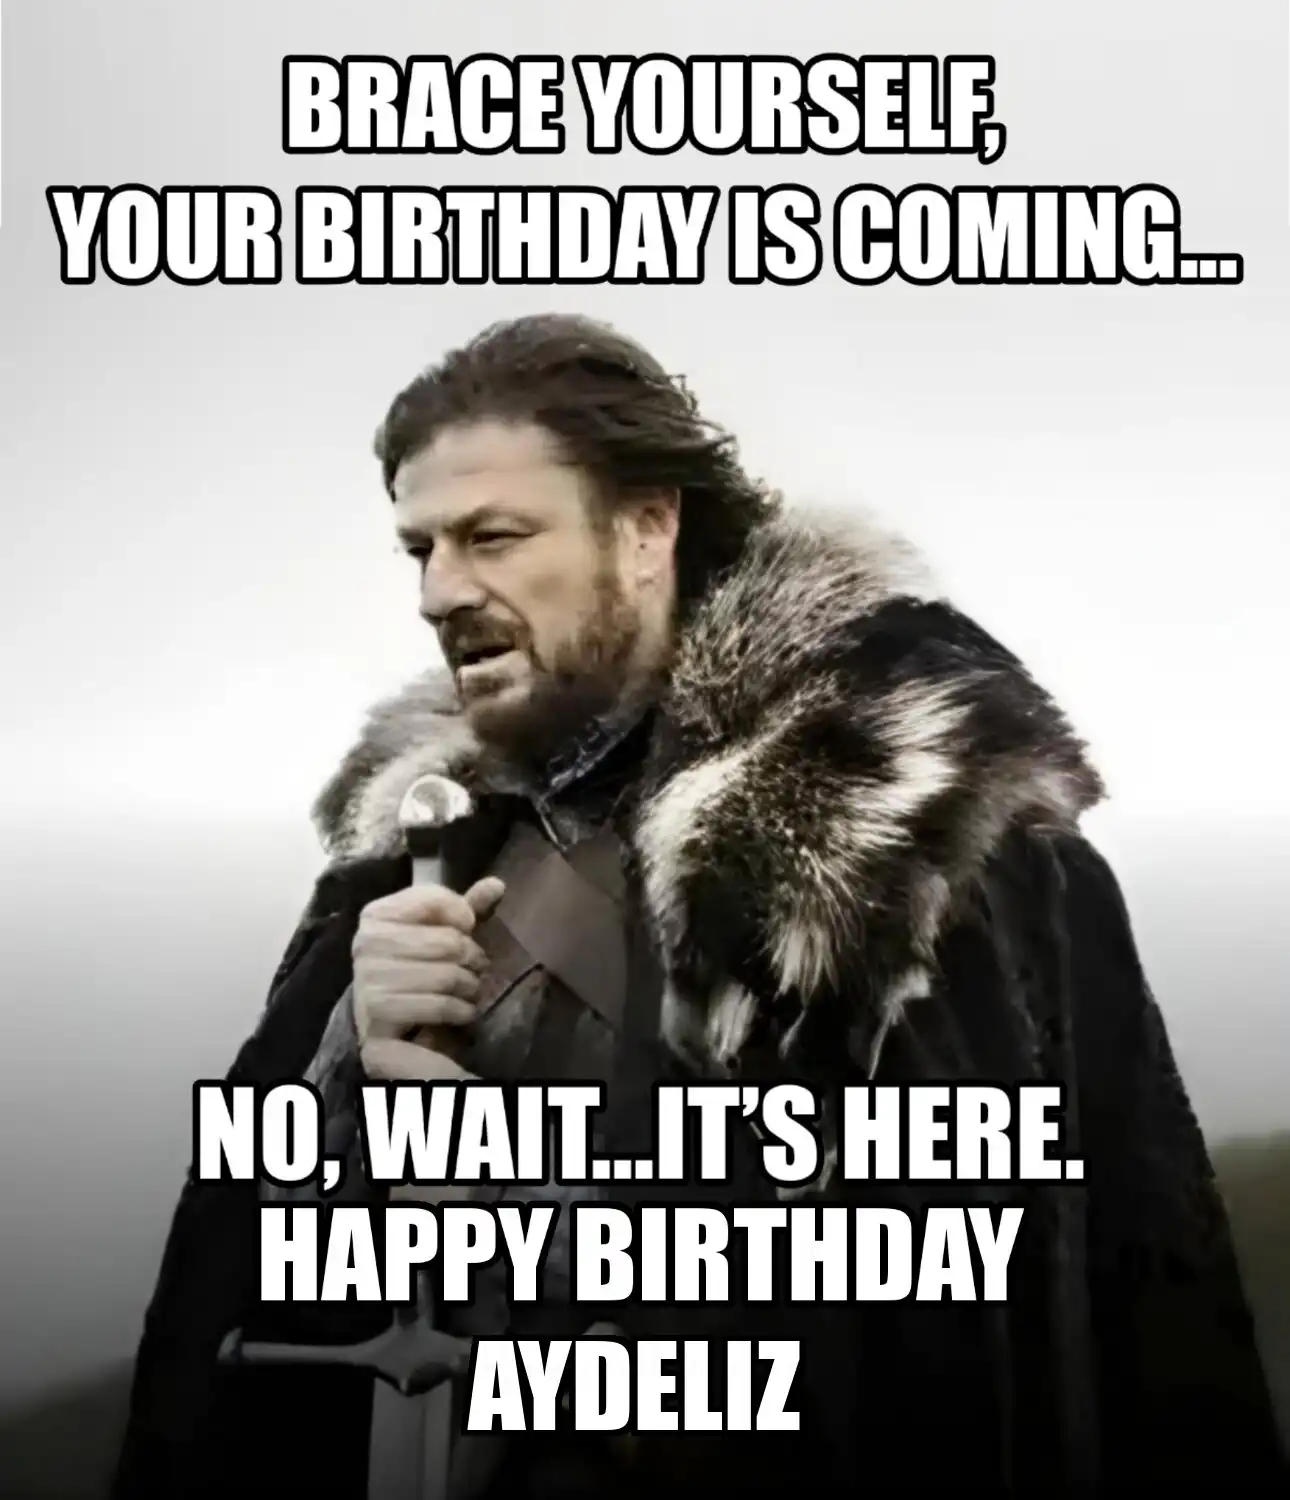 Happy Birthday Aydeliz Brace Yourself Your Birthday Is Coming Meme